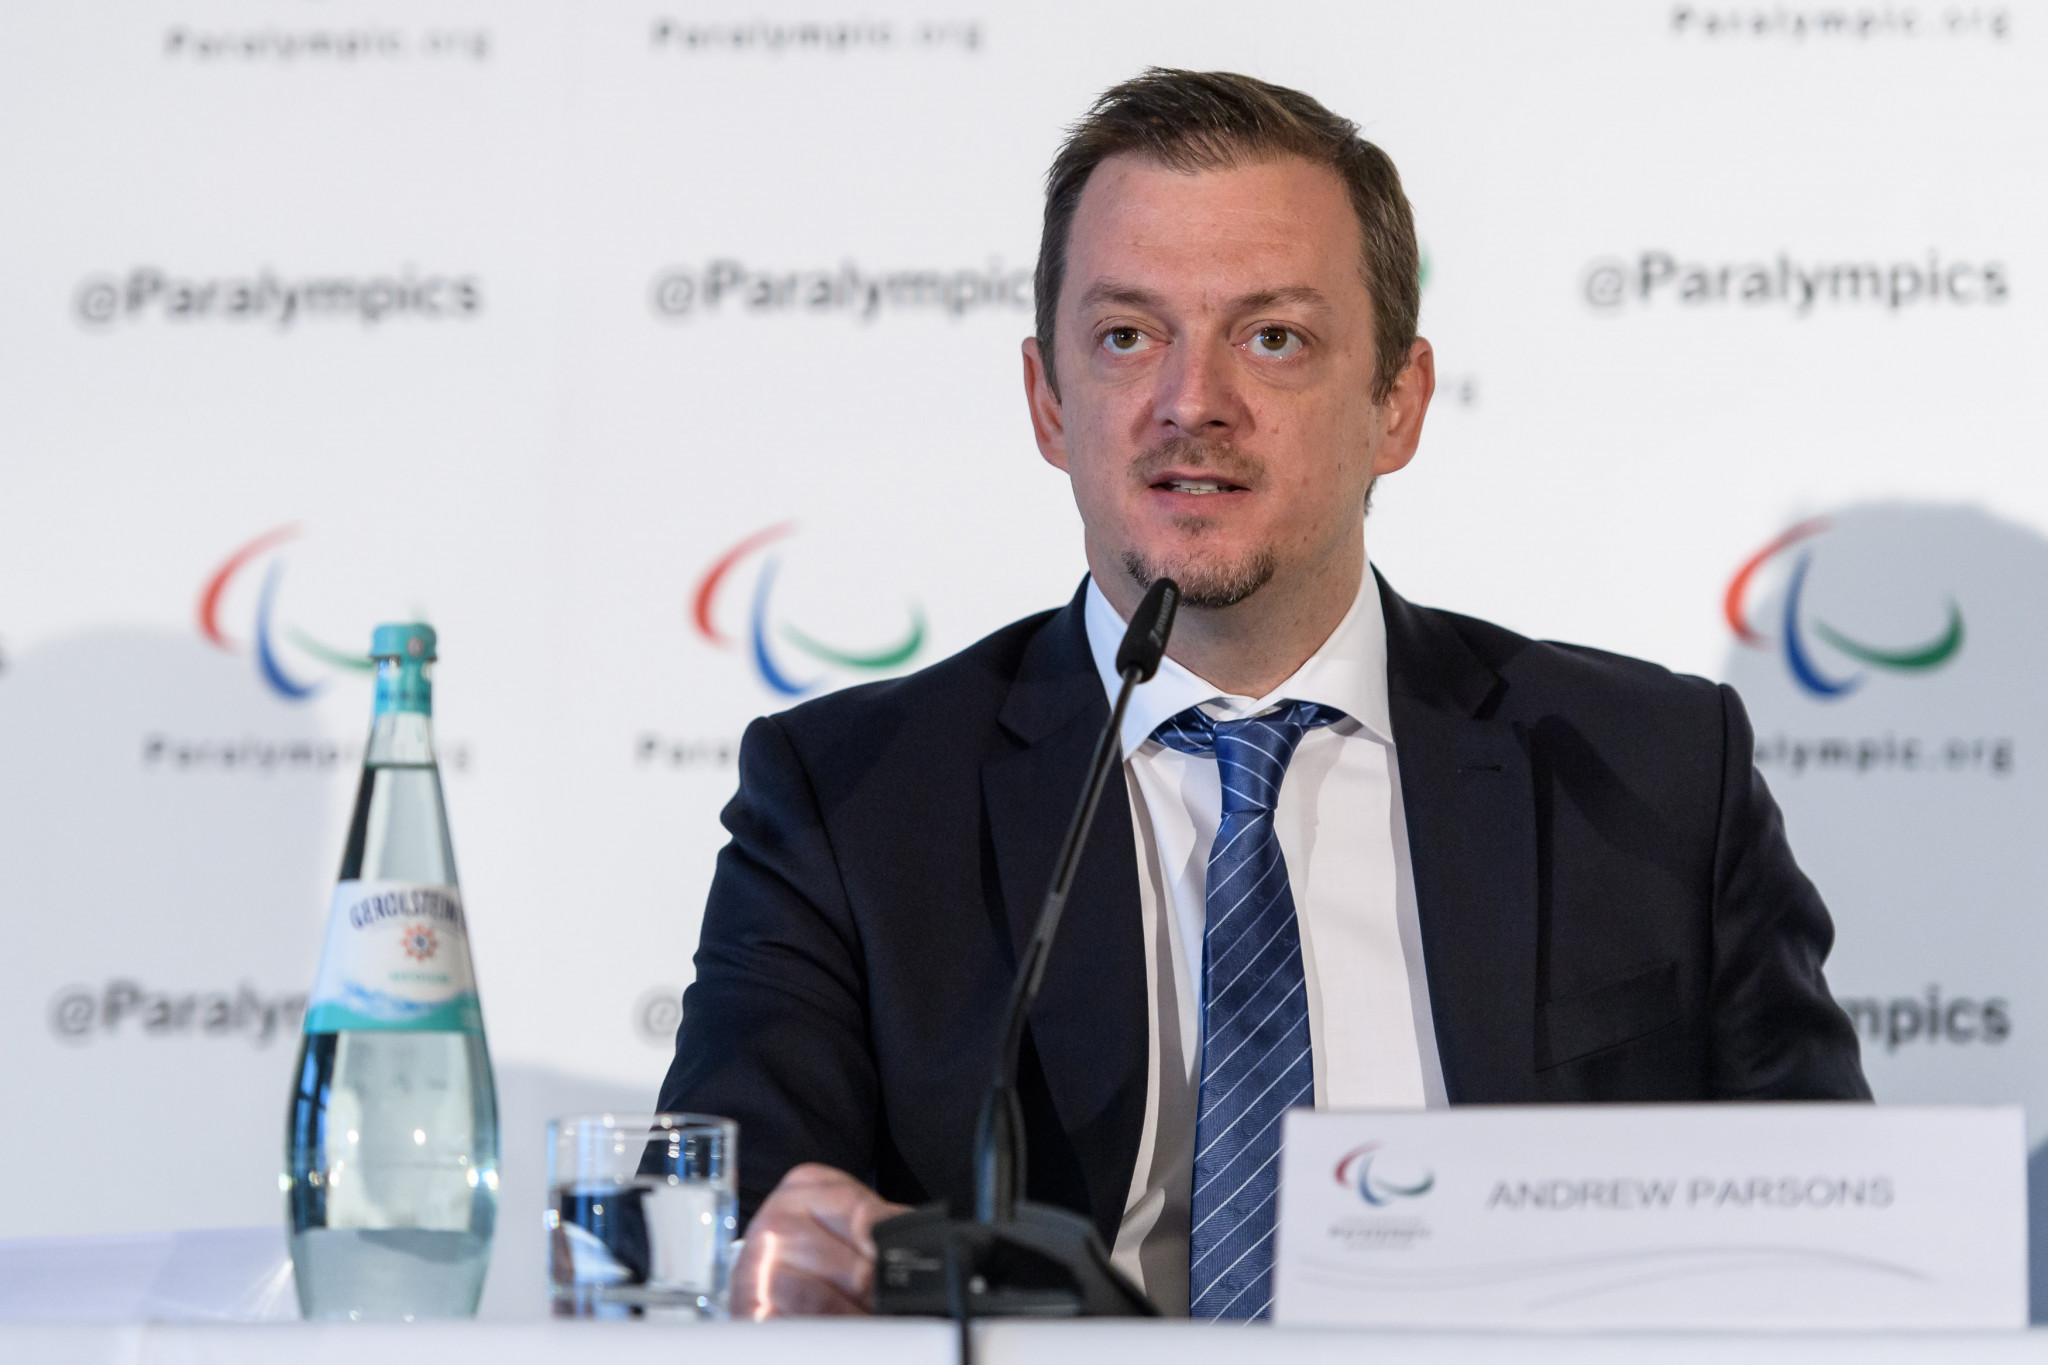 IPC President Parsons praises preparations for Tokyo 2020 Paralympics